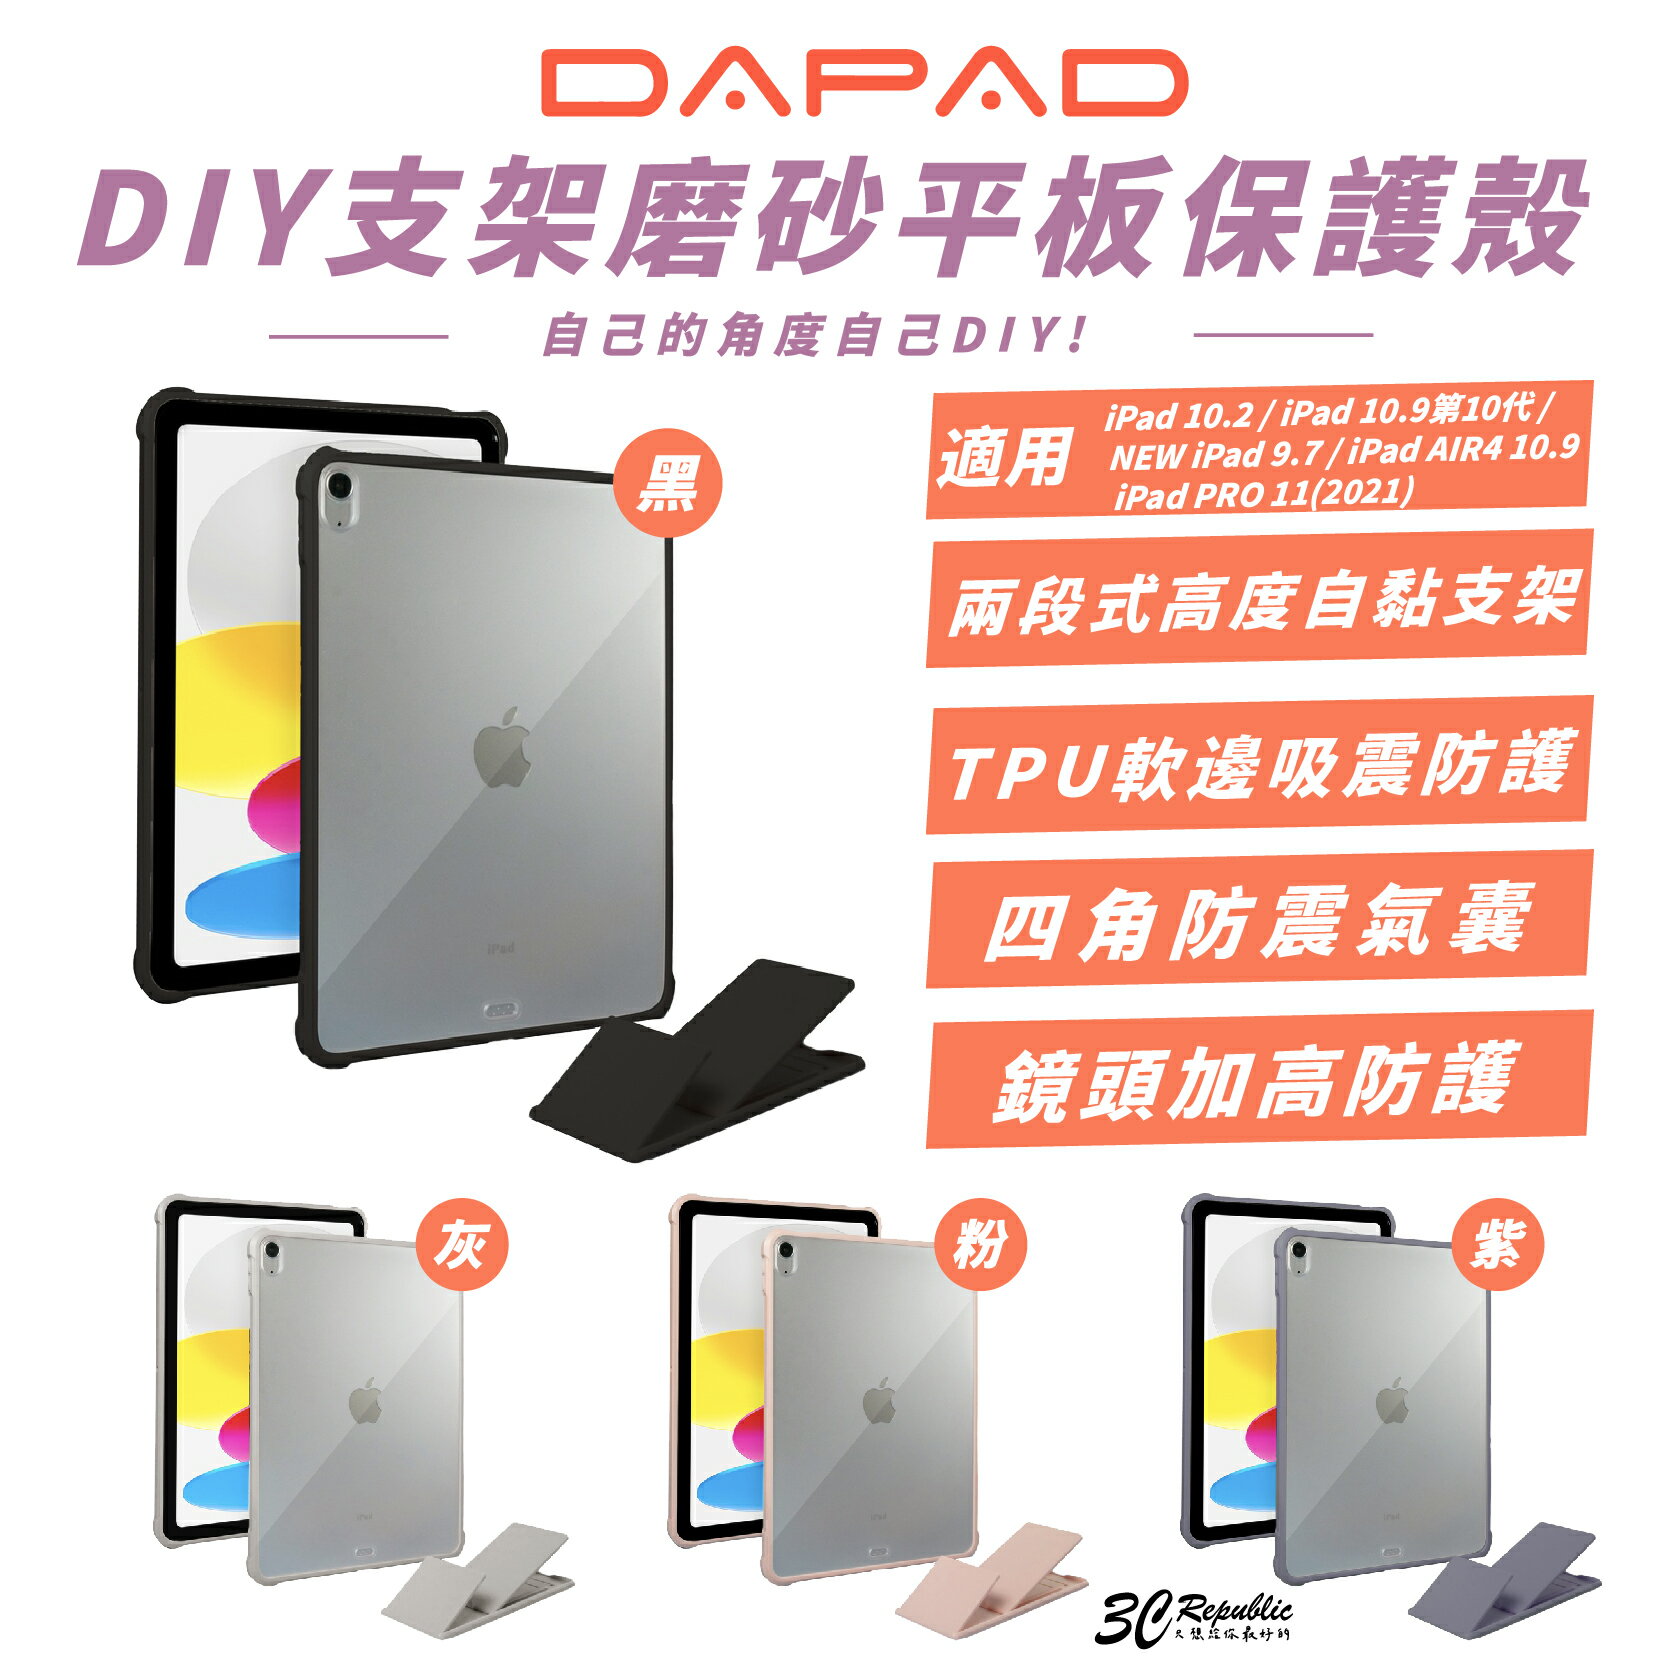 DAPAD 平板 支架 磨砂 保護殼 防摔殼 保護套 適 iPad 10.2 10.9 9.7 Air 4 Pro 11